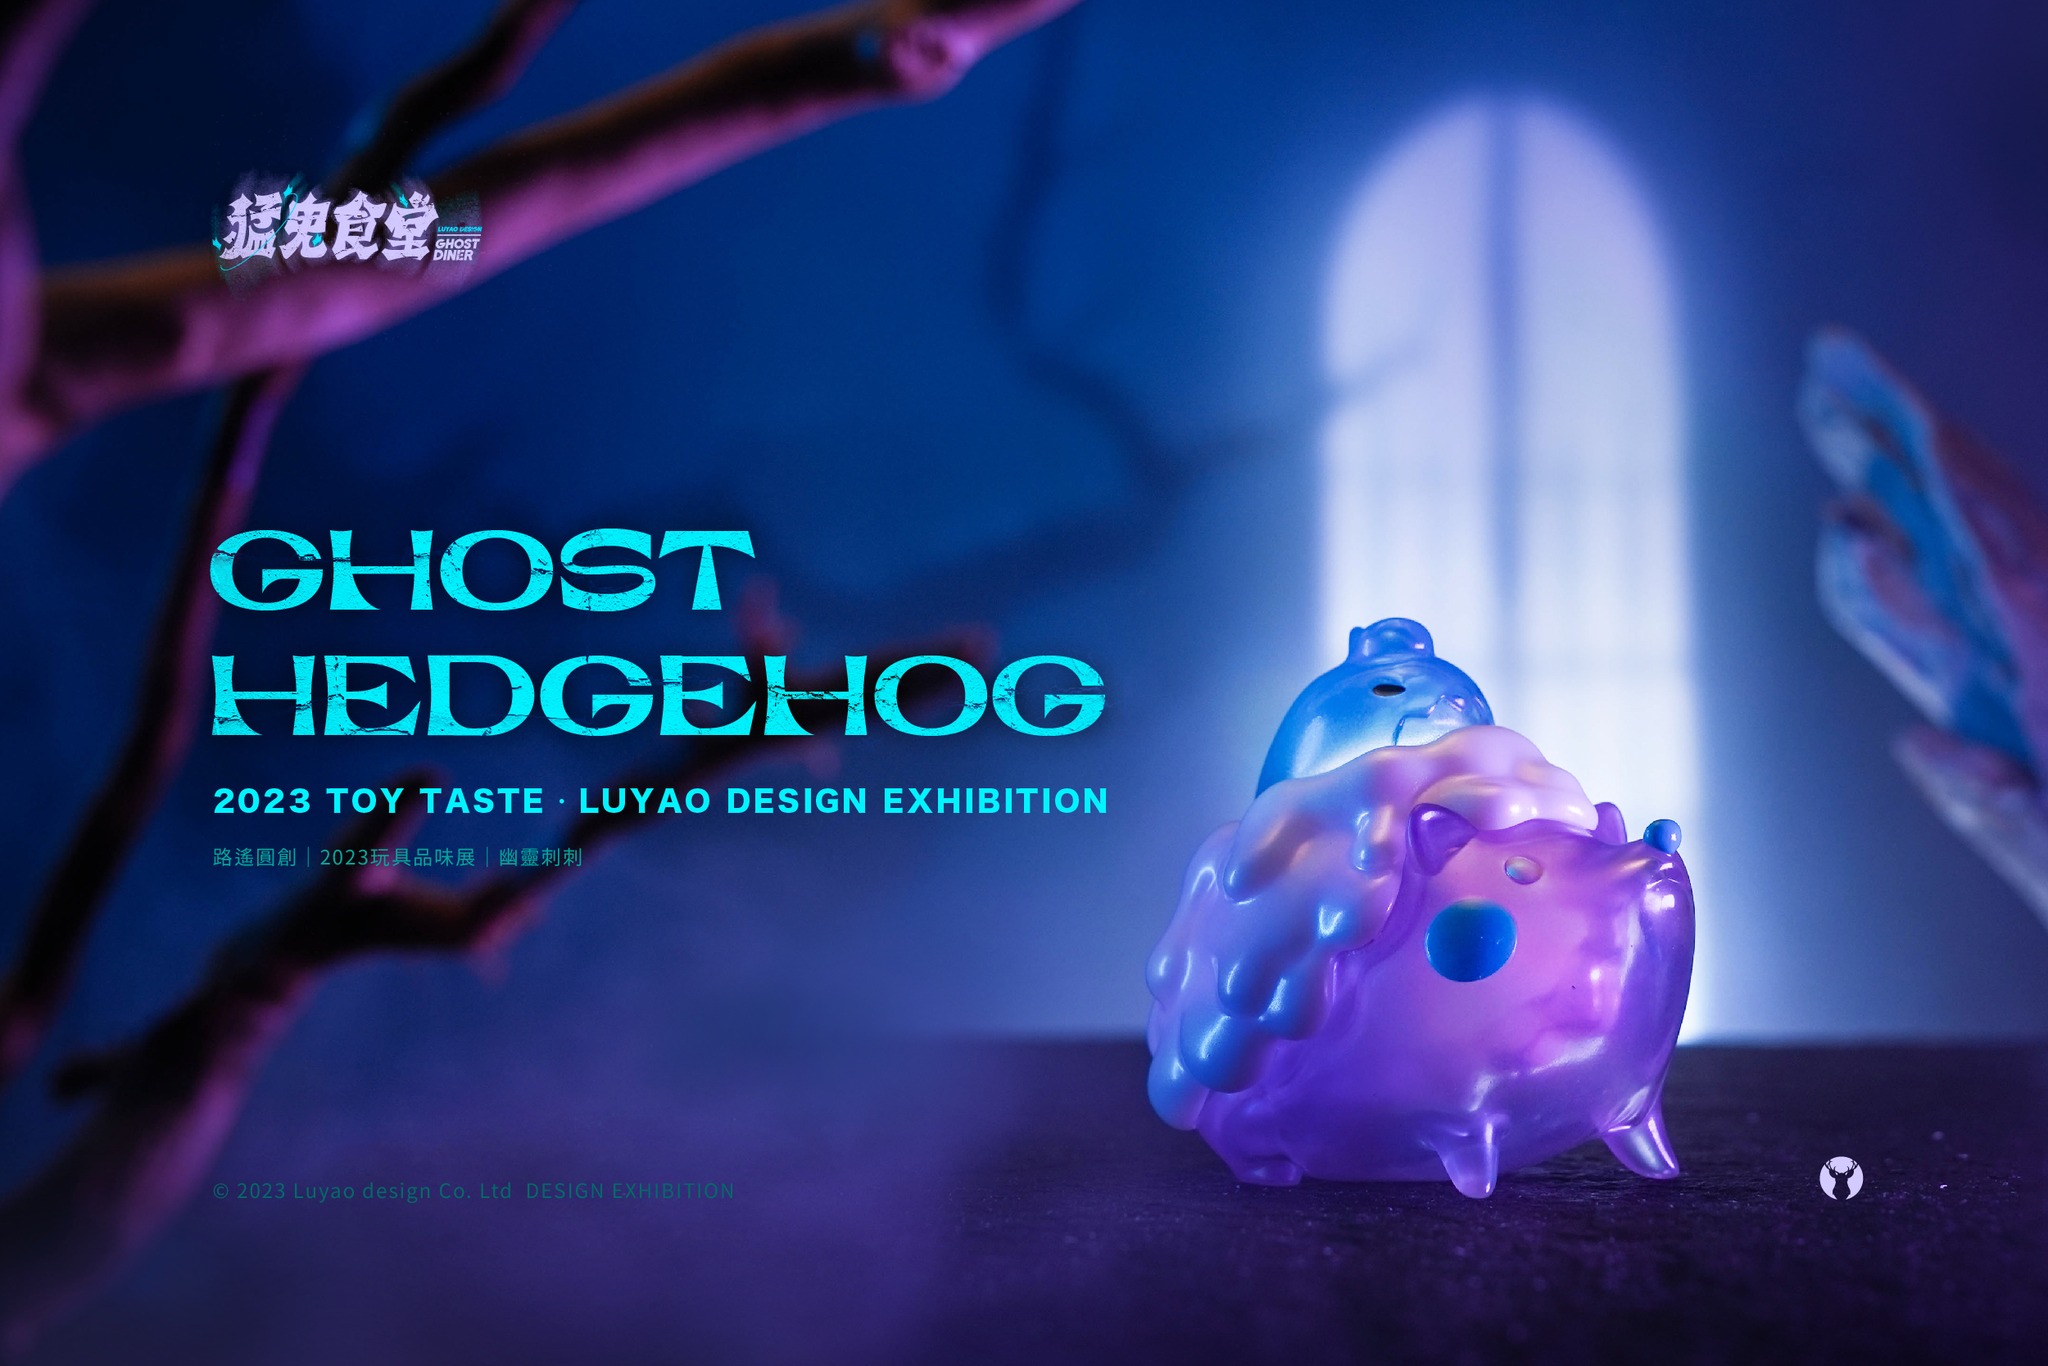 Season Hedgehog Ghost Edition by LUYAO